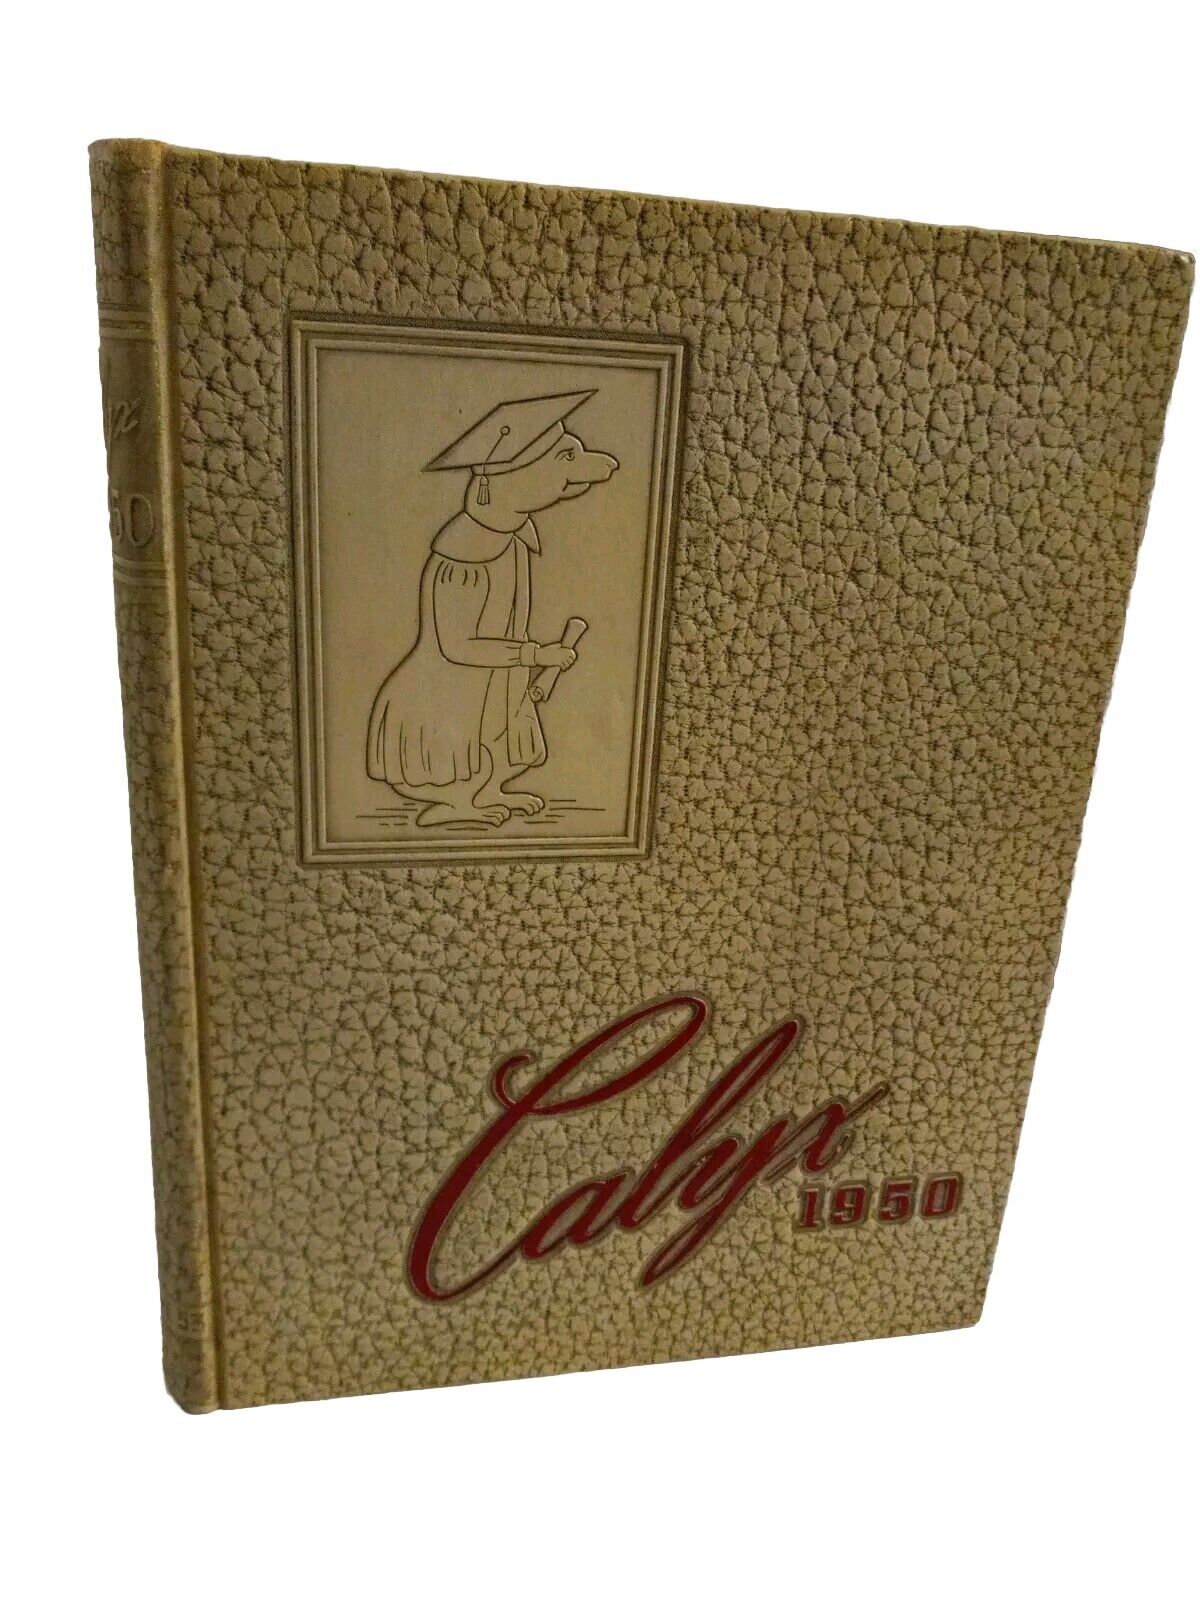 the calyx of Washington and lee University yearbook 1950 Virginia